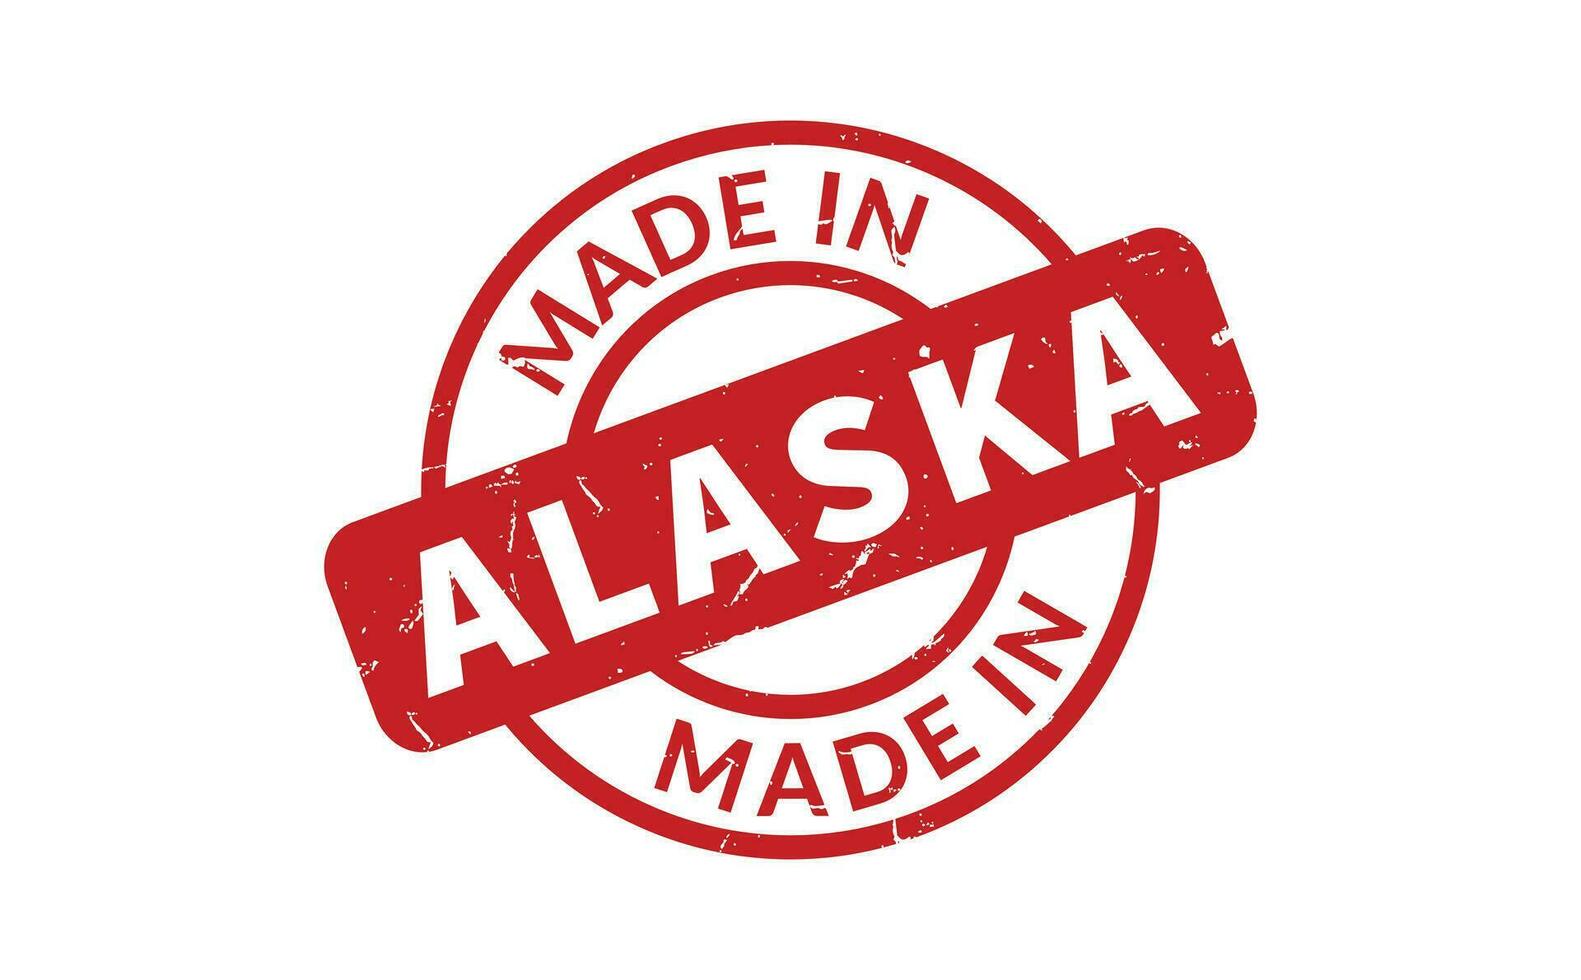 Made In Alaska Rubber Stamp vector